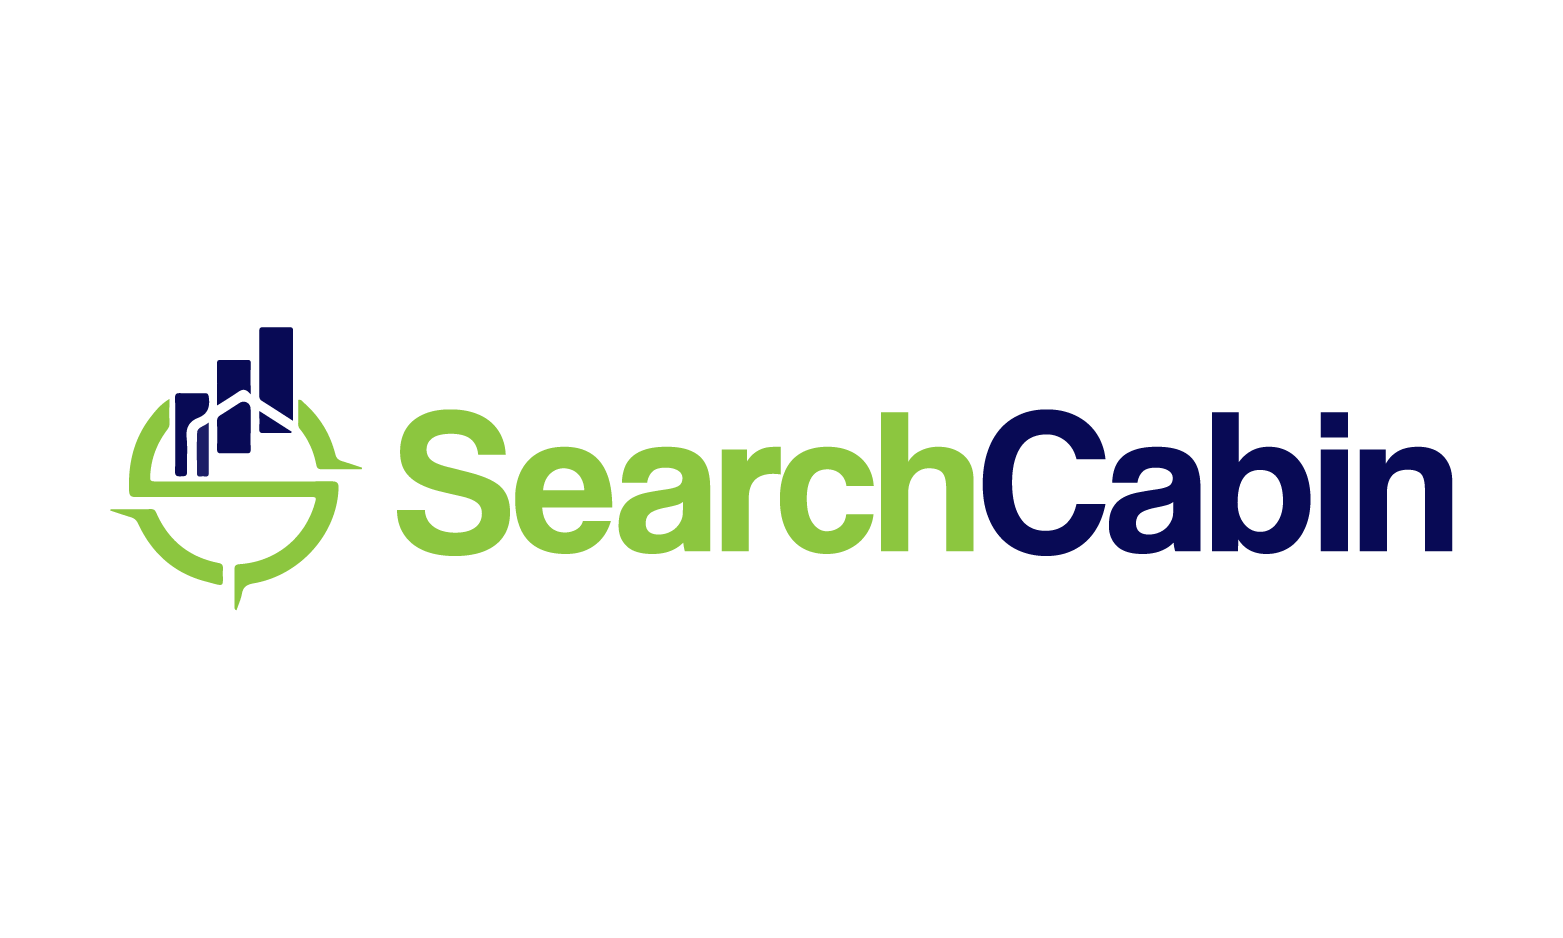 SearchCabin.com - Creative brandable domain for sale